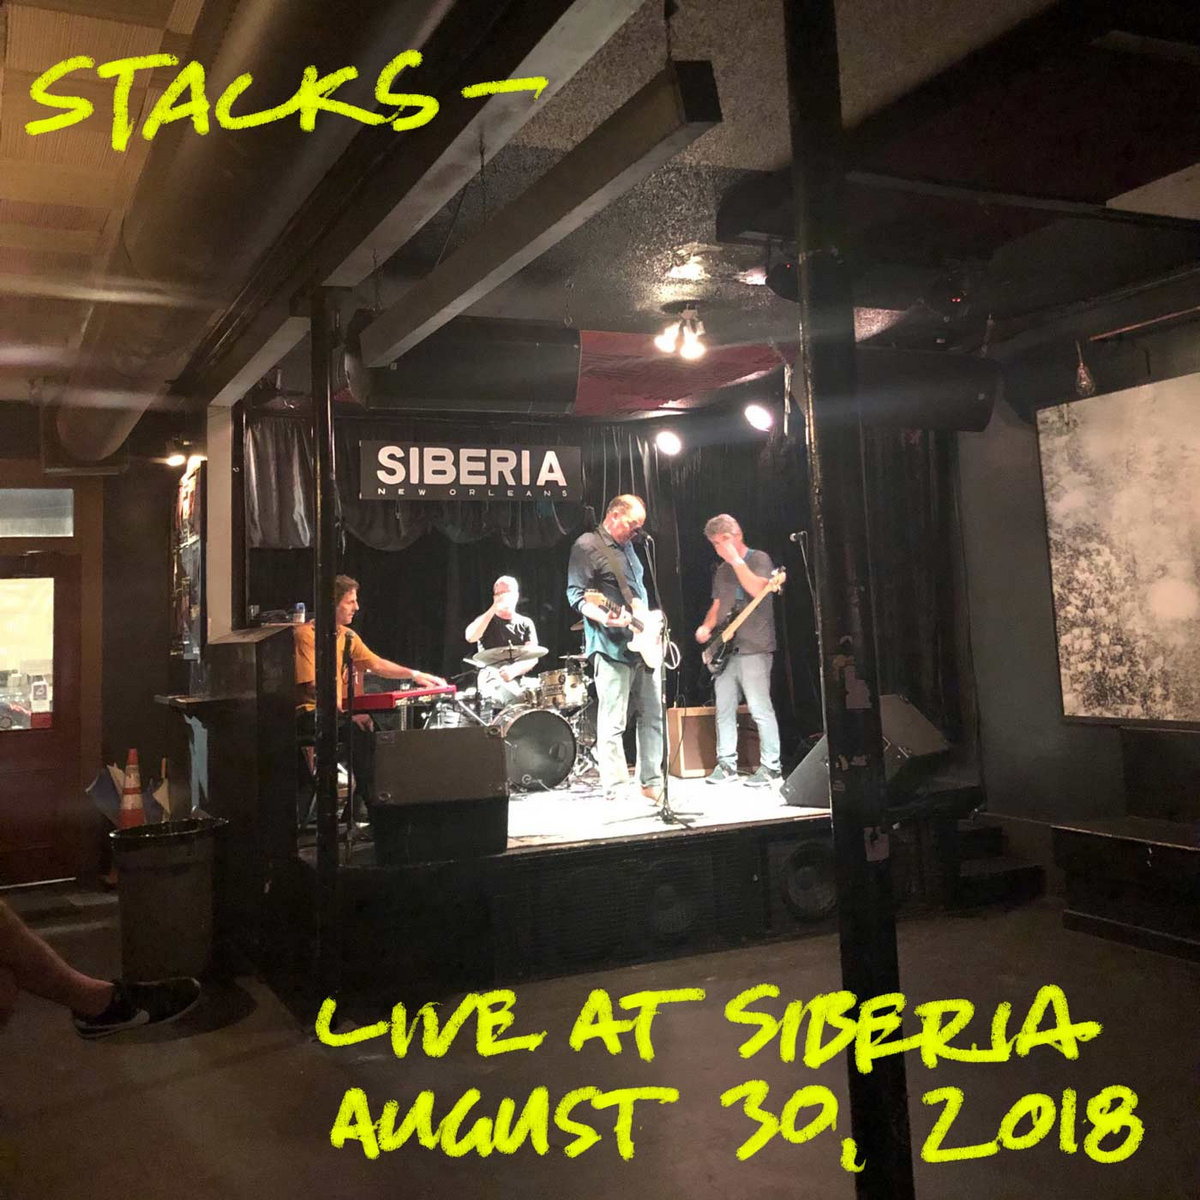 The Stacks played Siberia